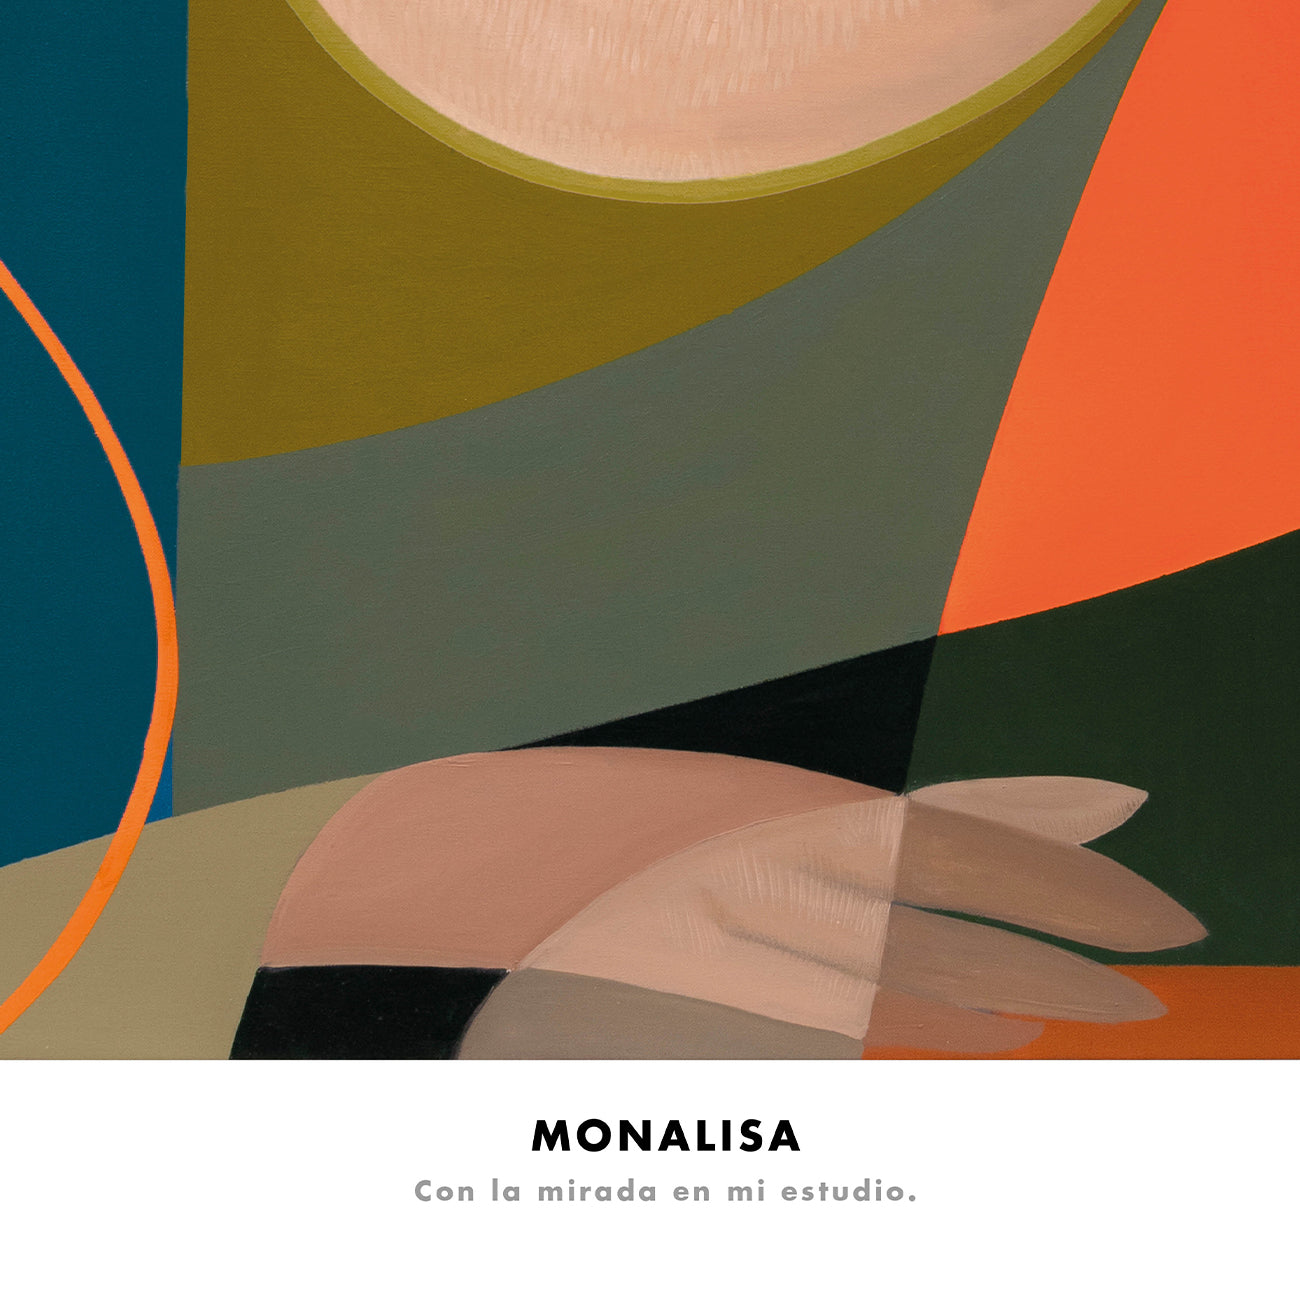 Poster "MONALISA"